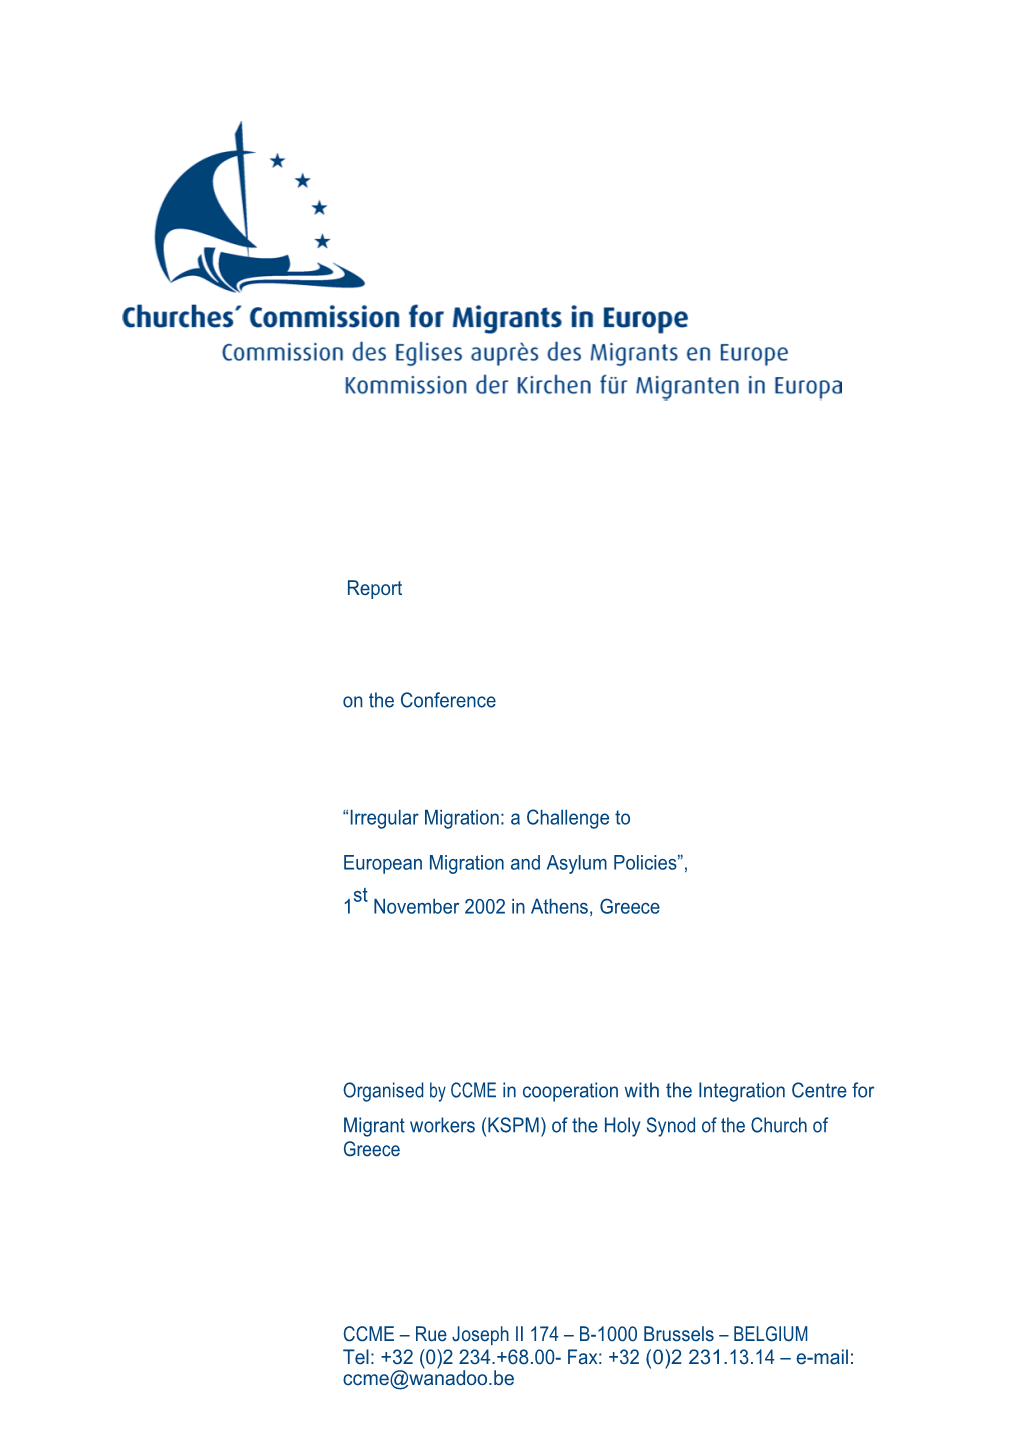 Irregular Migration: a Challenge to European Migration and Asylum